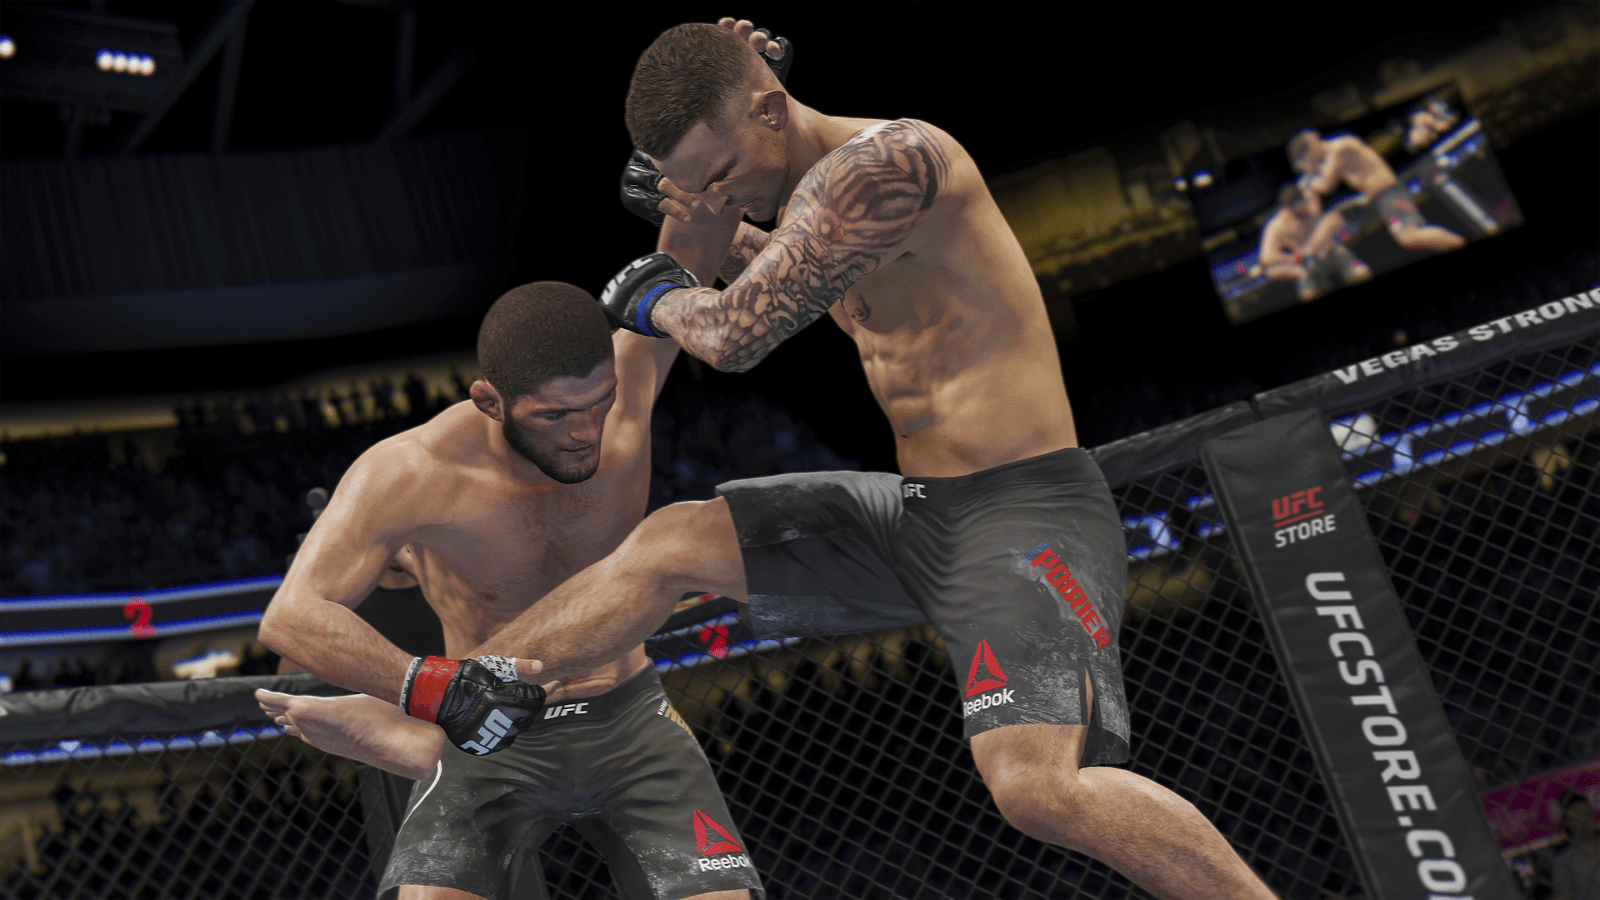 Диск GamesSoftware PS4 UFC 4, BD диск фото №9